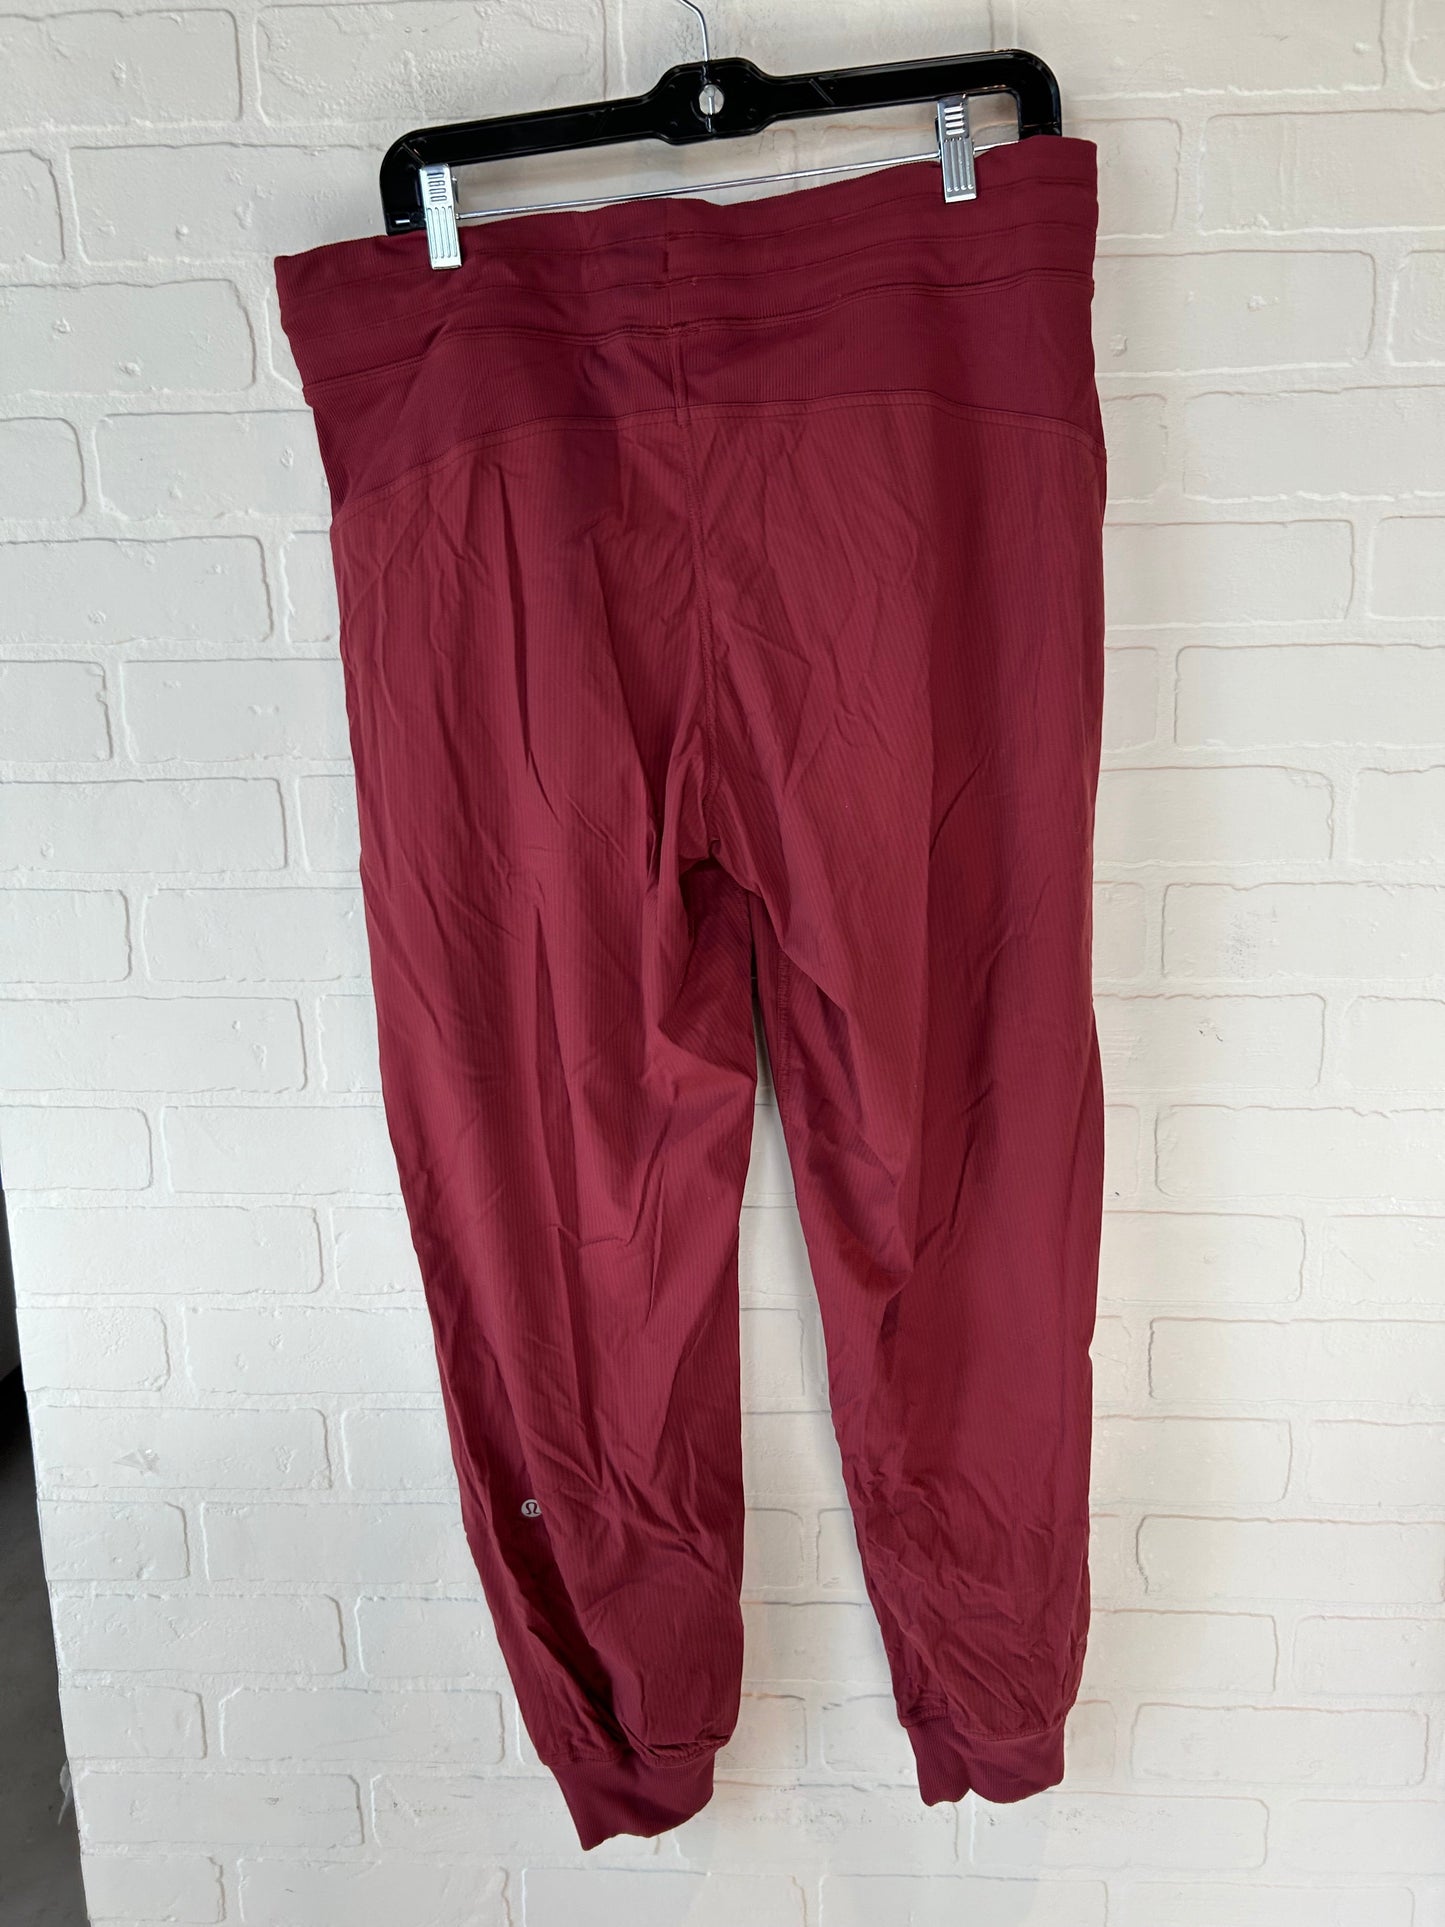 Red Athletic Pants Lululemon, Size 12